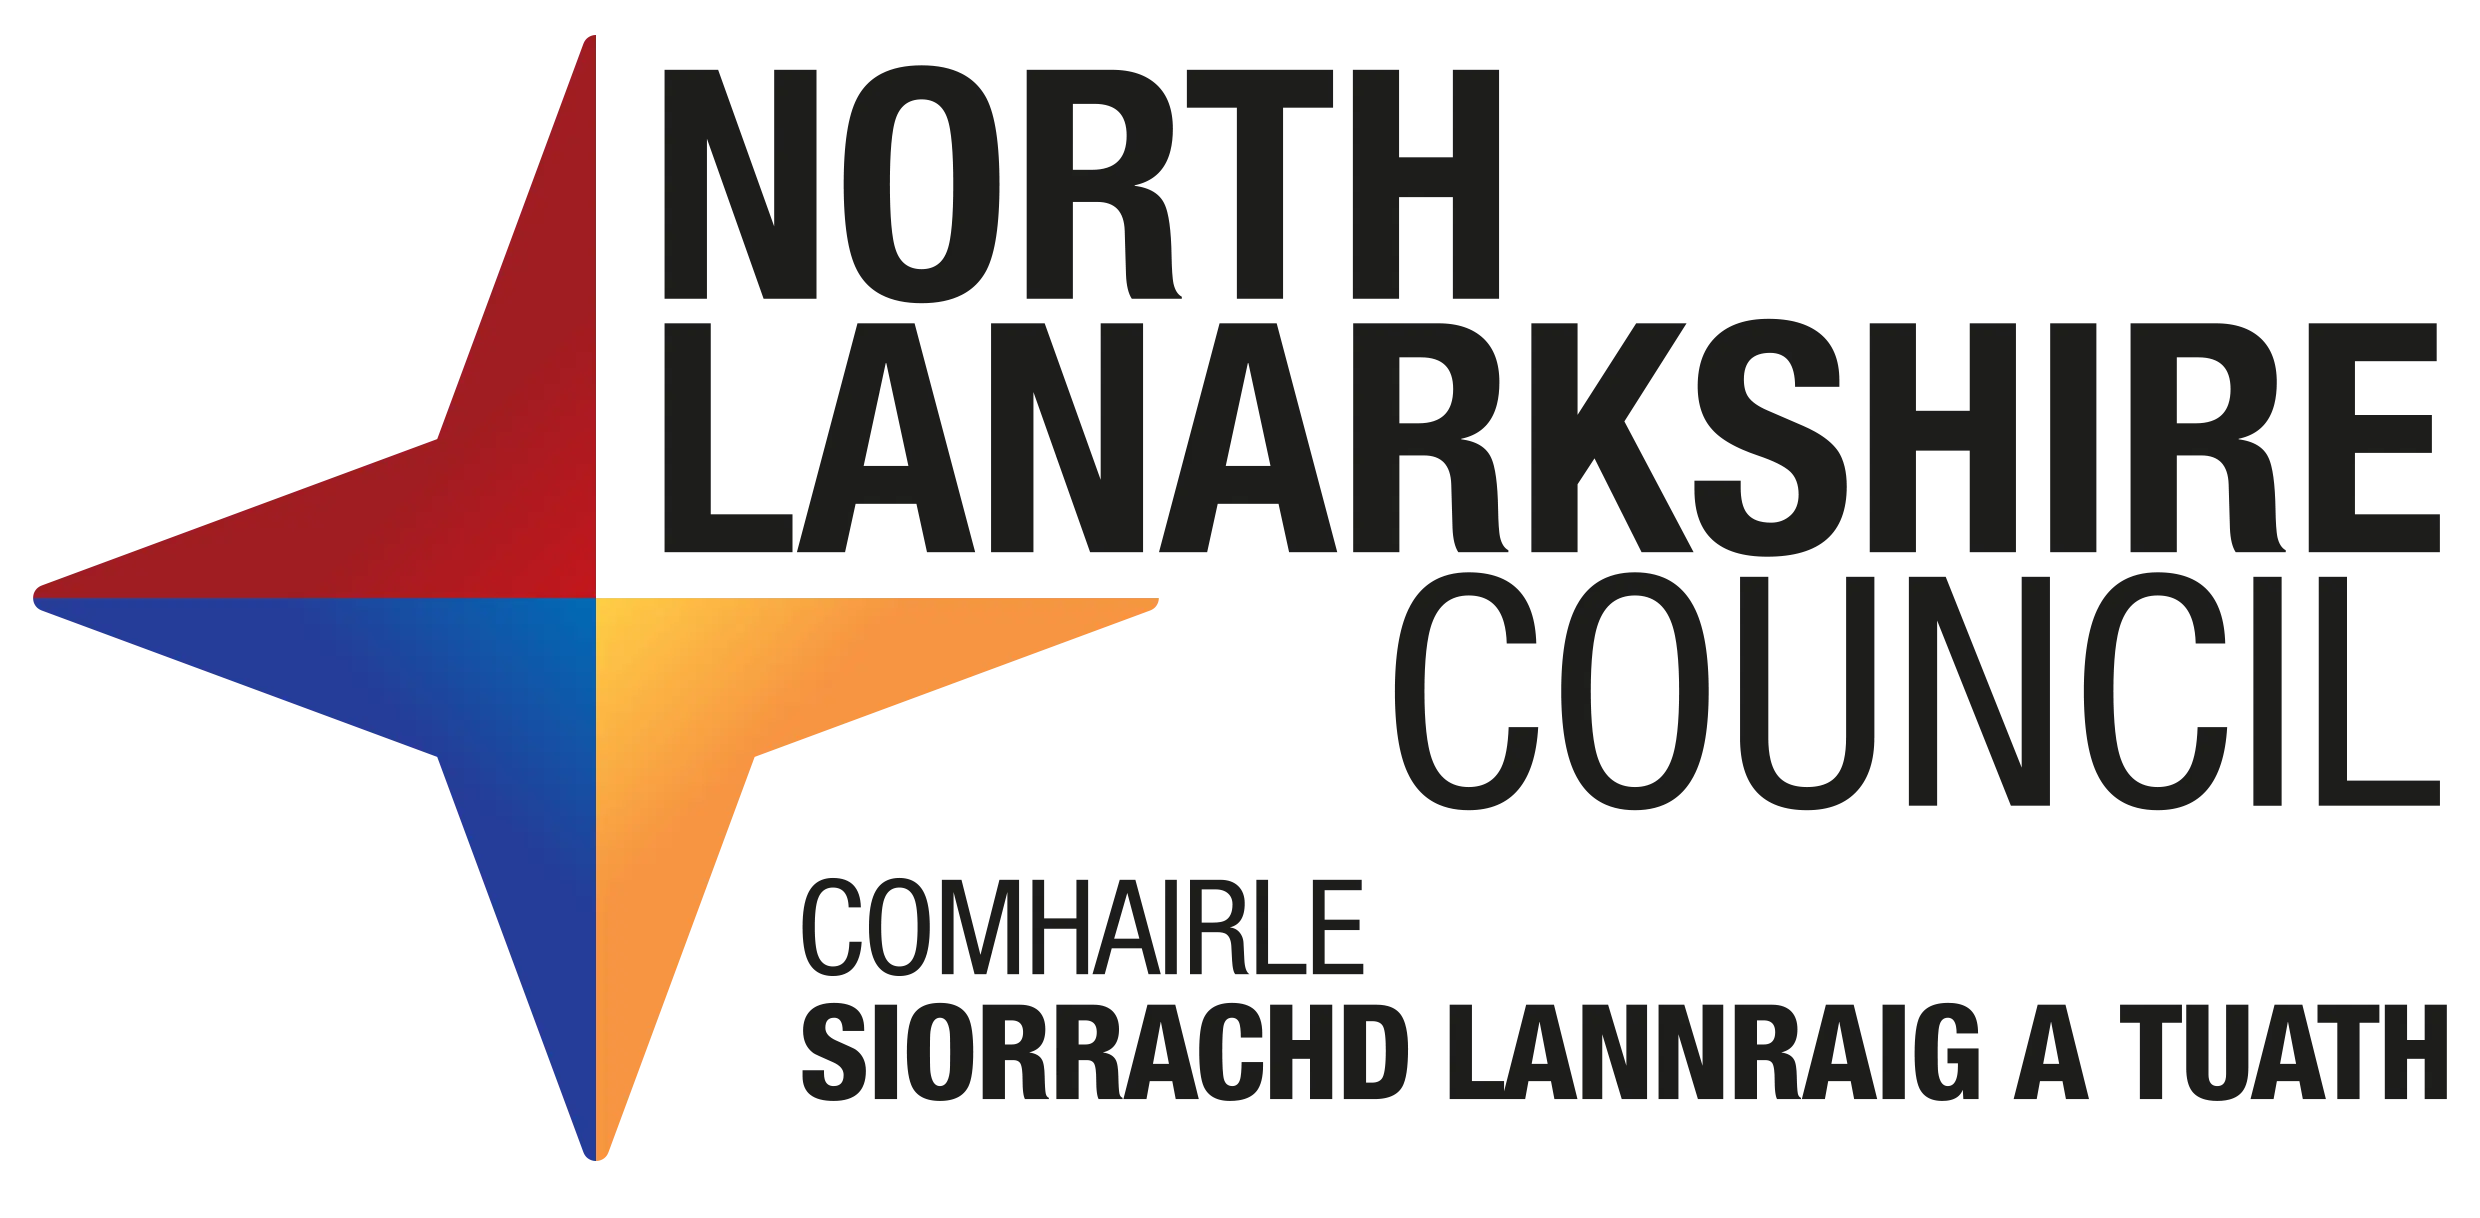 North Lanarkshire Council logo